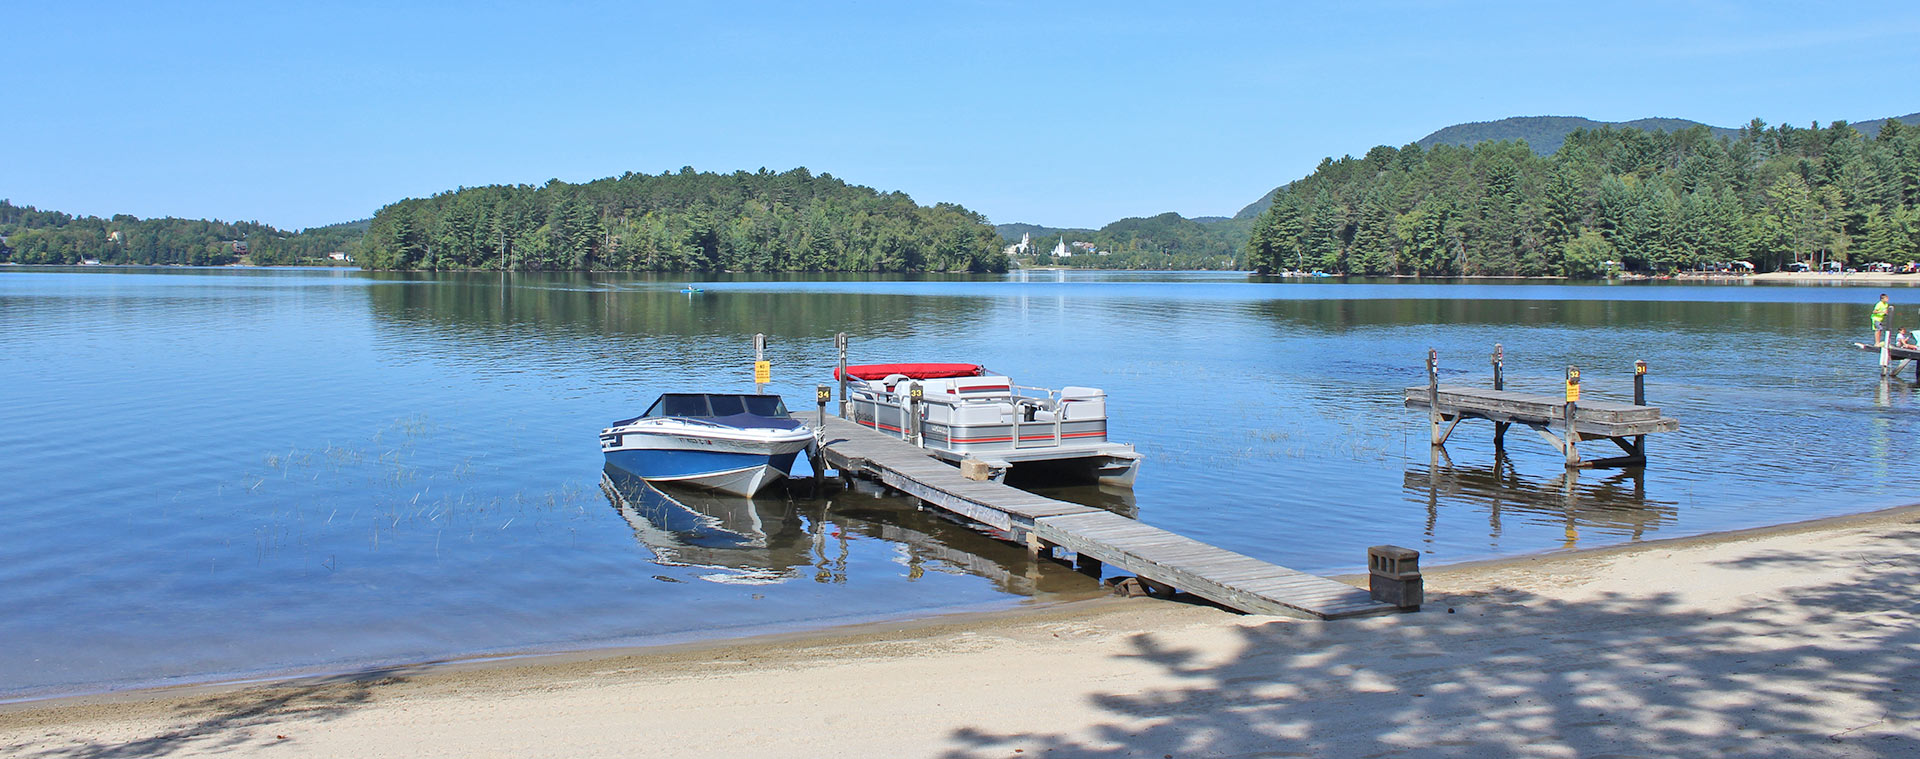 Lakeside Camping Boat Docks